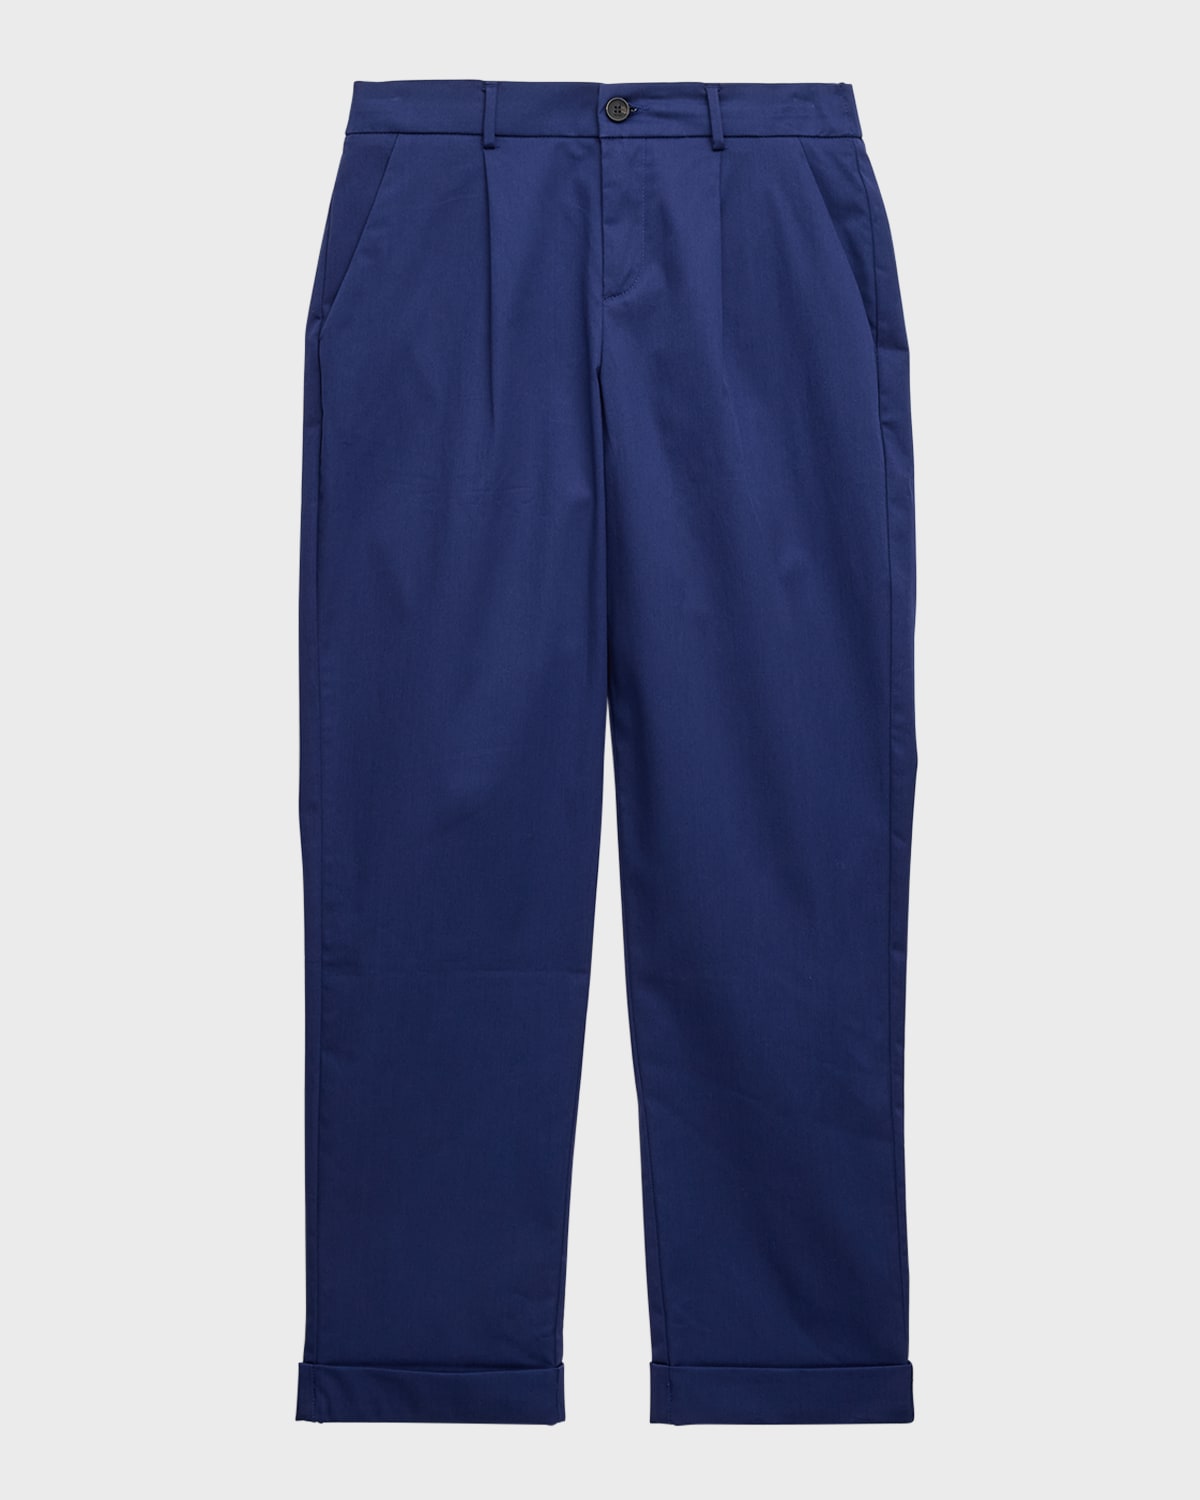 Fendi Kids' Boy's Chino Trousers W/ Monogram Pocket In Navy